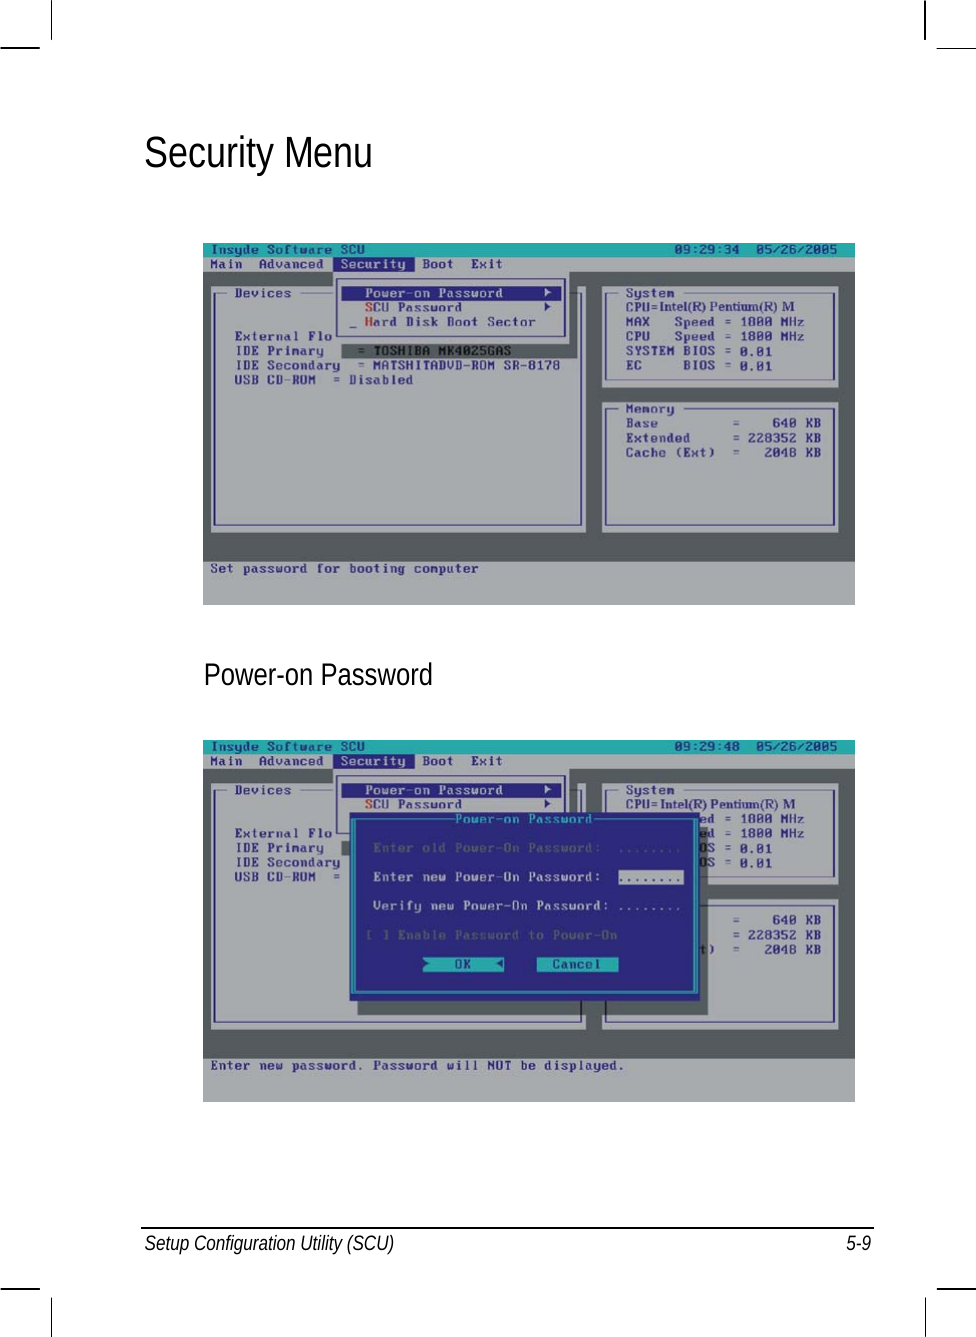  Security Menu  Power-on Password   Setup Configuration Utility (SCU)  5-9 